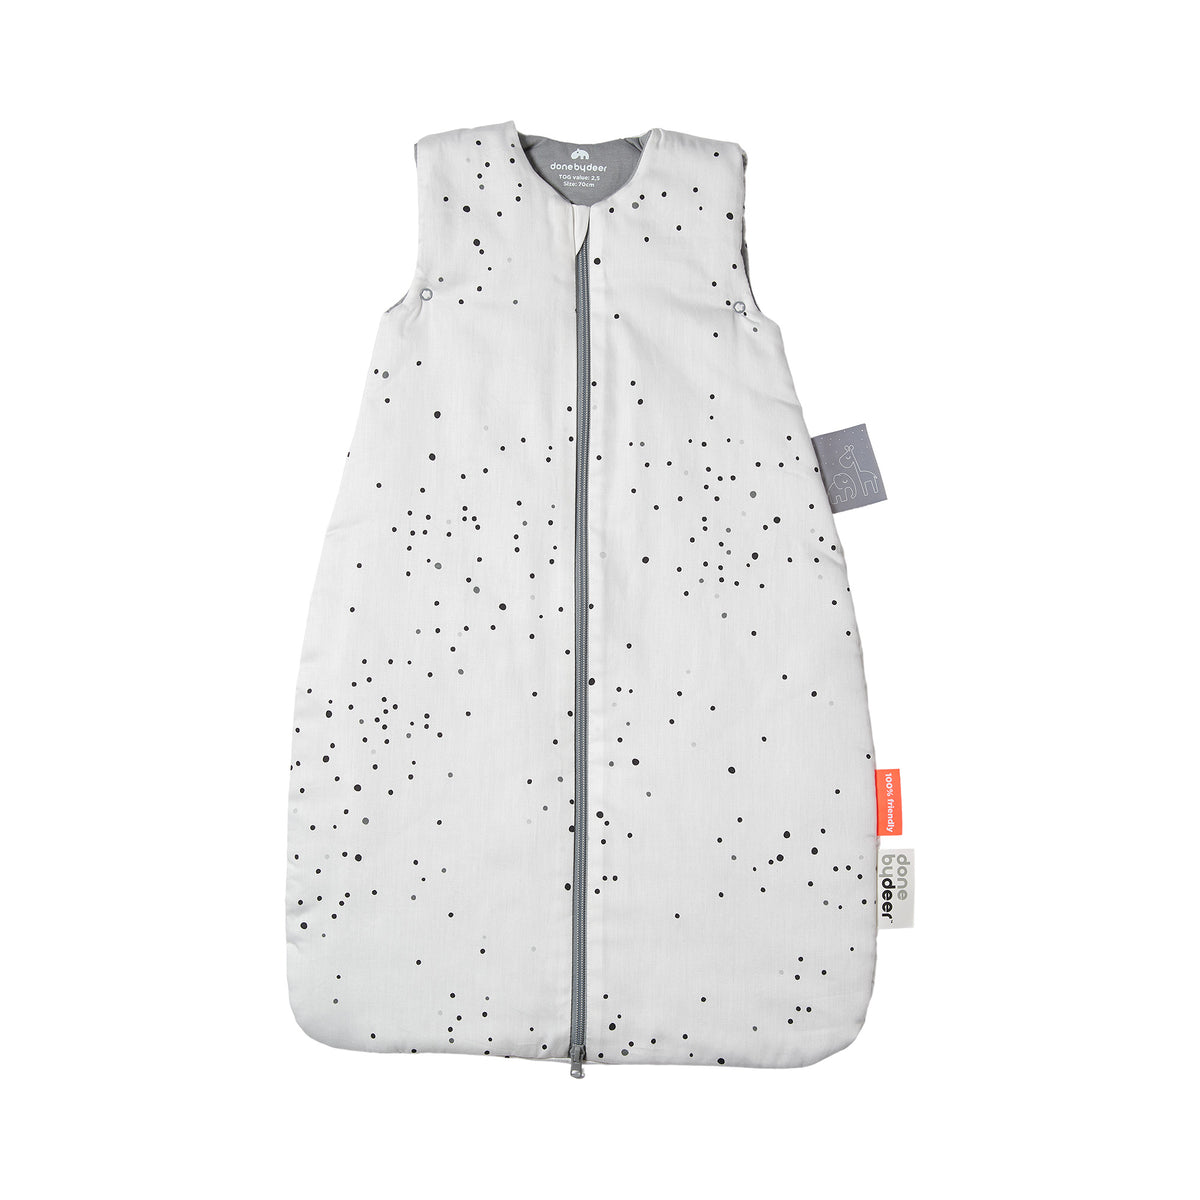 Sleepy bag 90 cm - Dreamy dots - White - Front